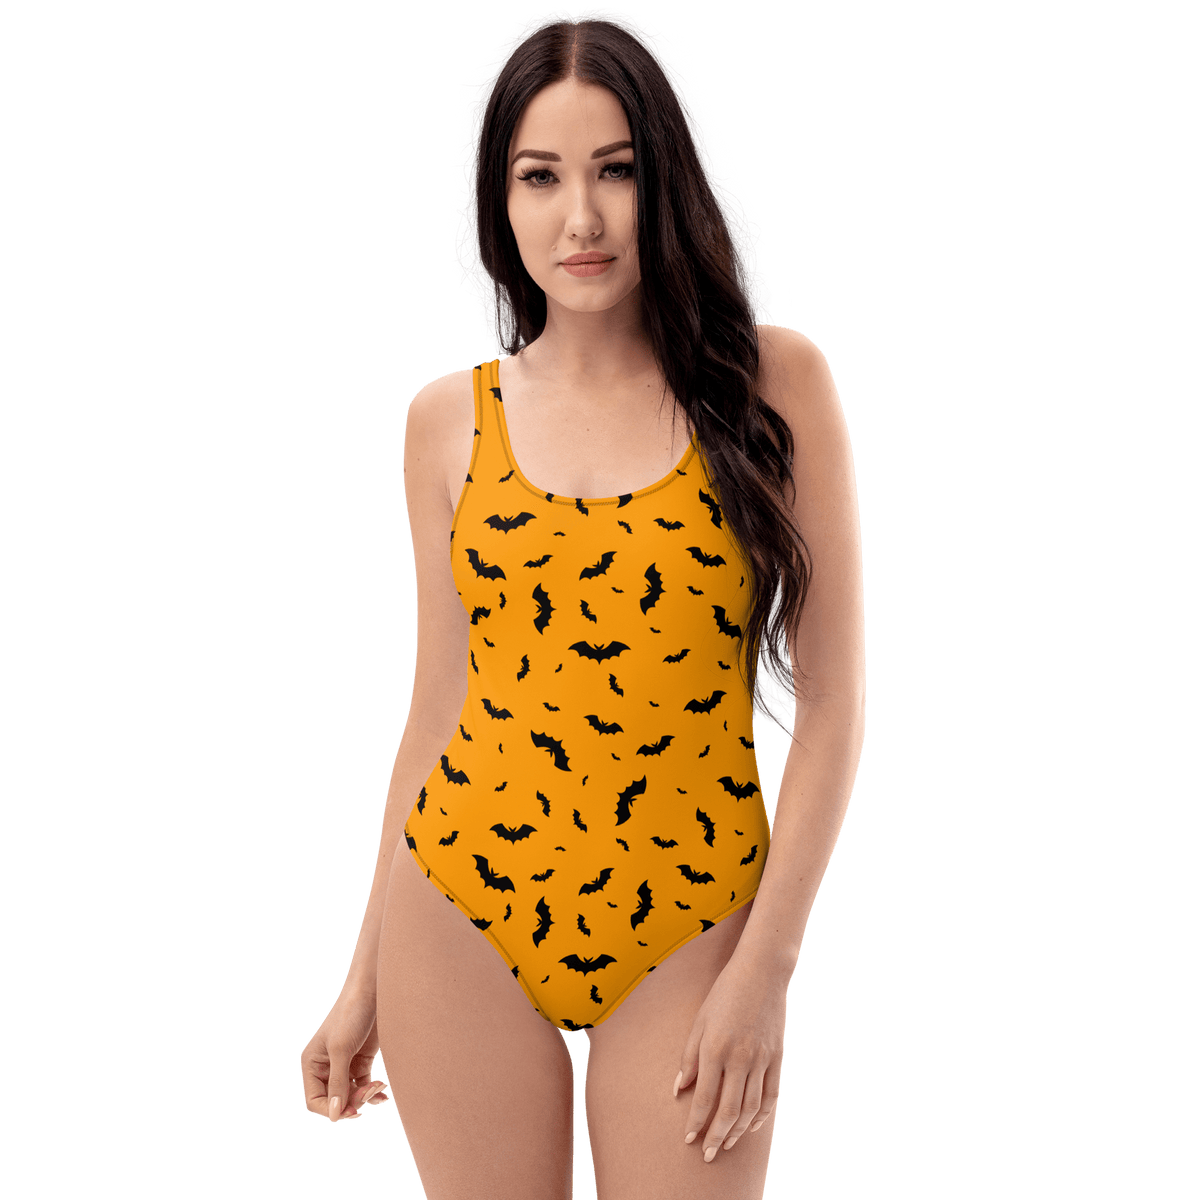 Orange Eclipse One-Piece Swimsuit - Goth Cloth Co.5939080_9014